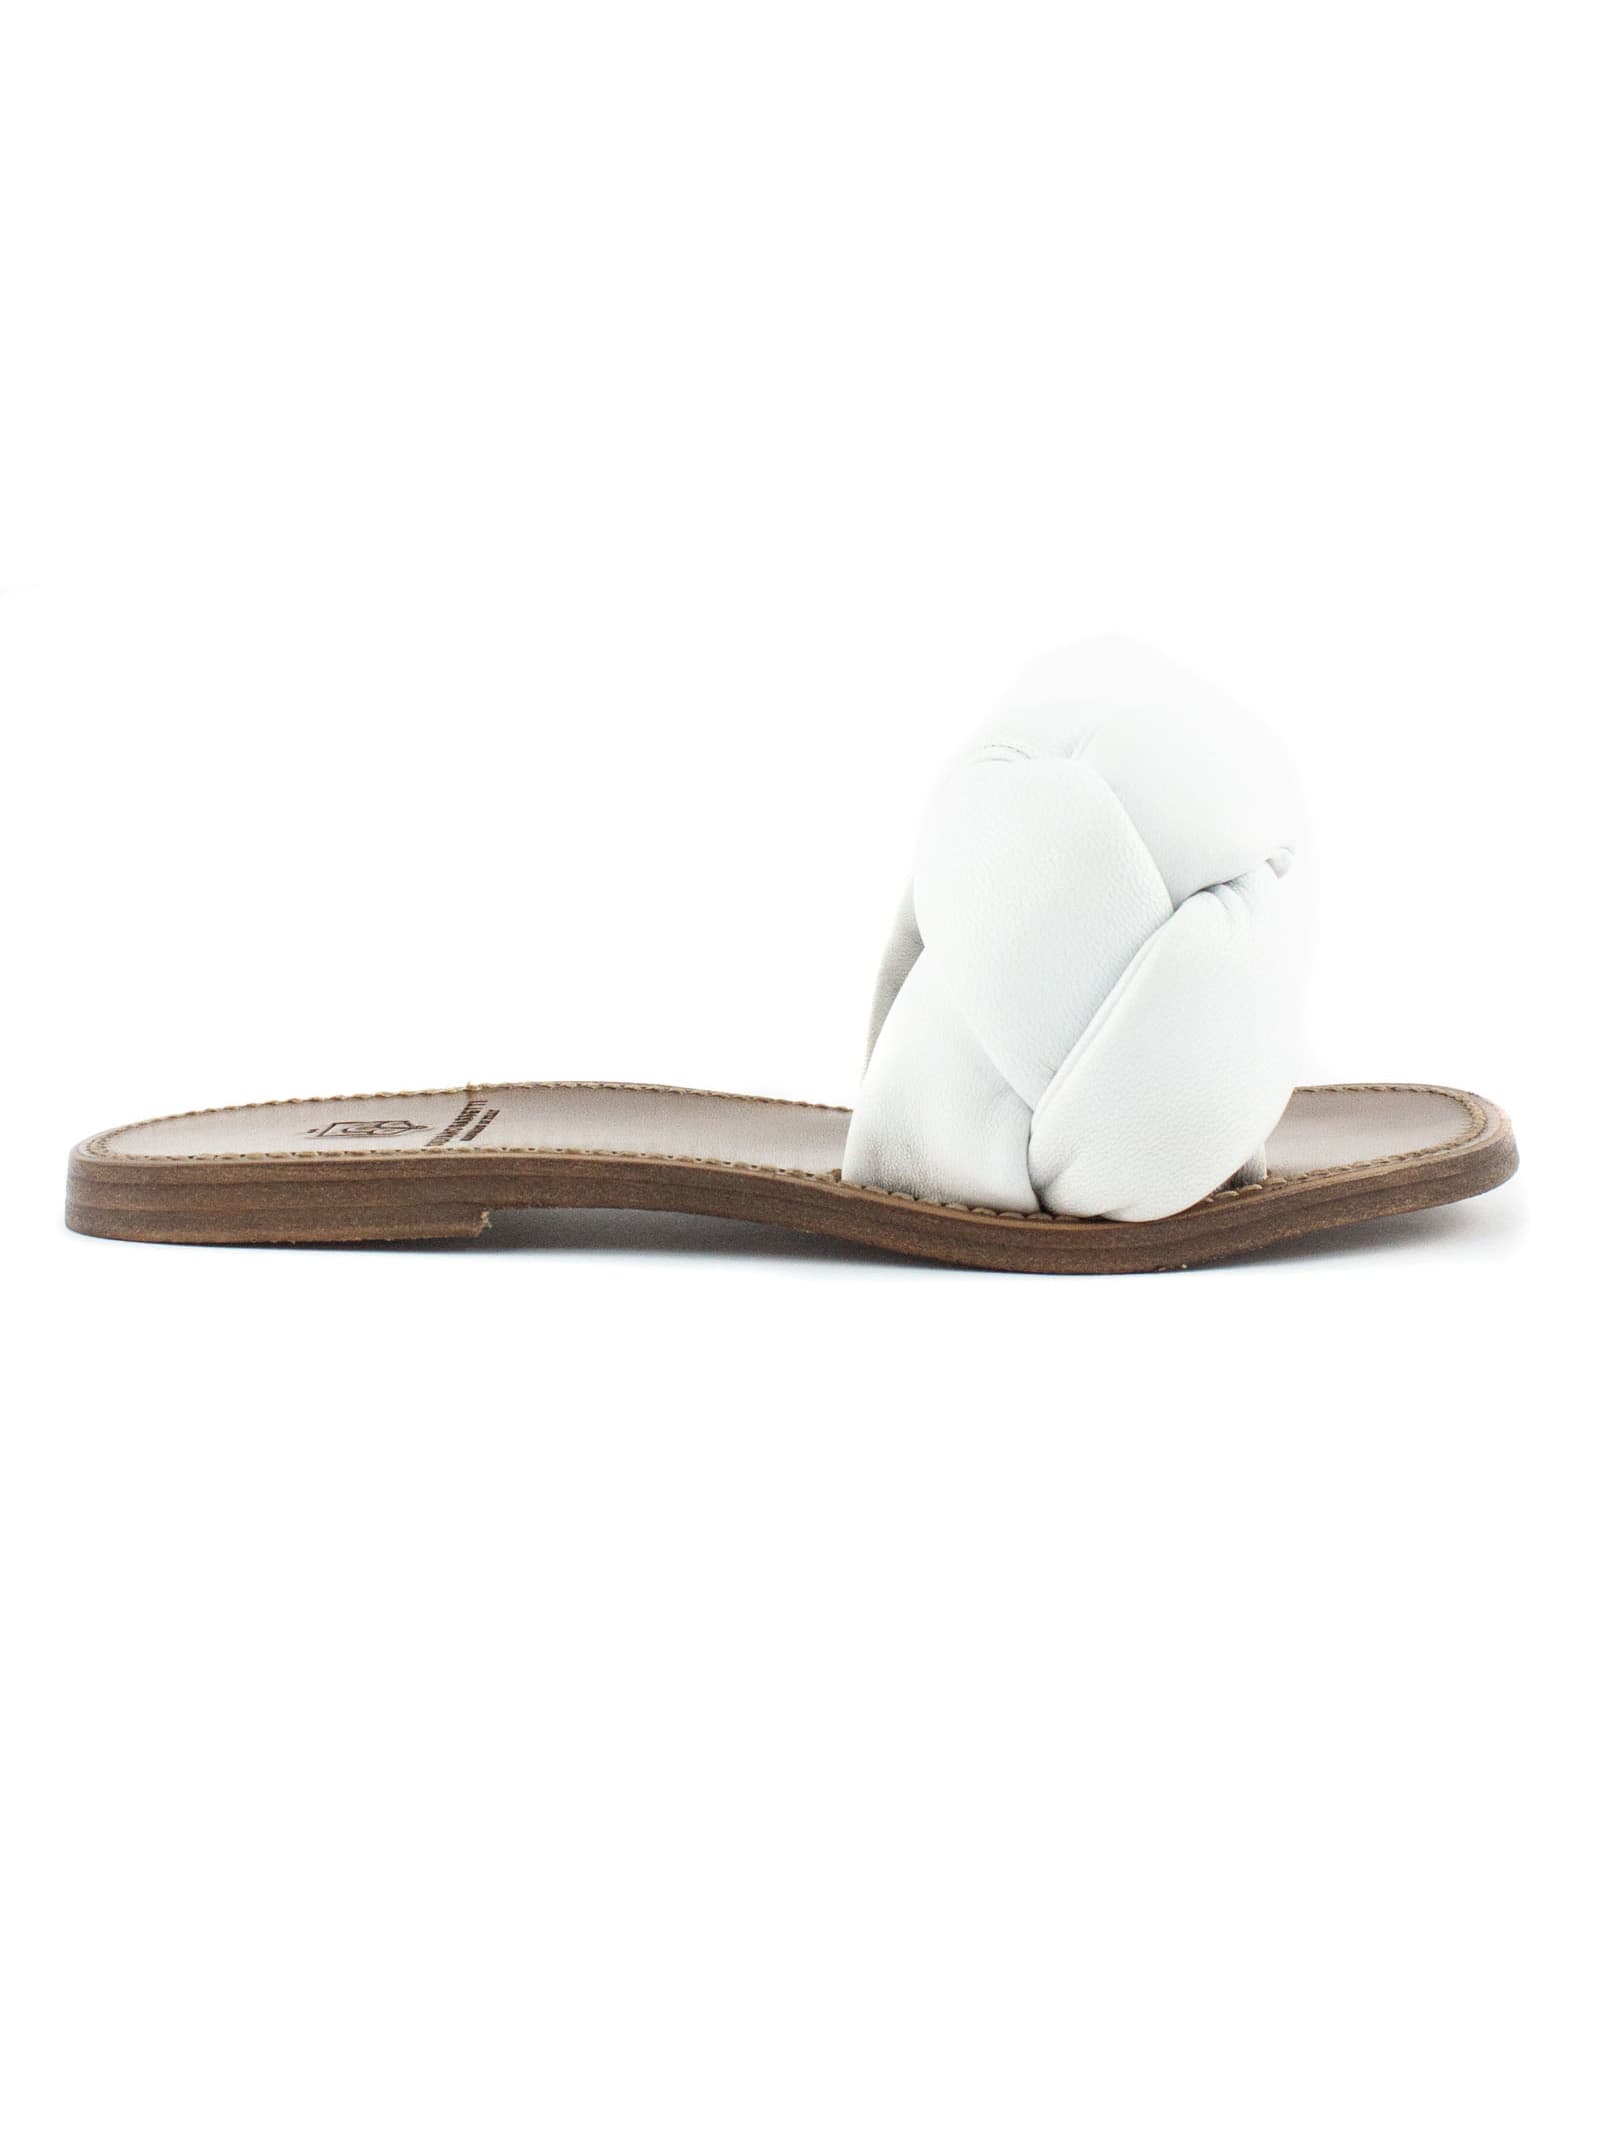 Silvano Sassetti White Leather Low Sandals